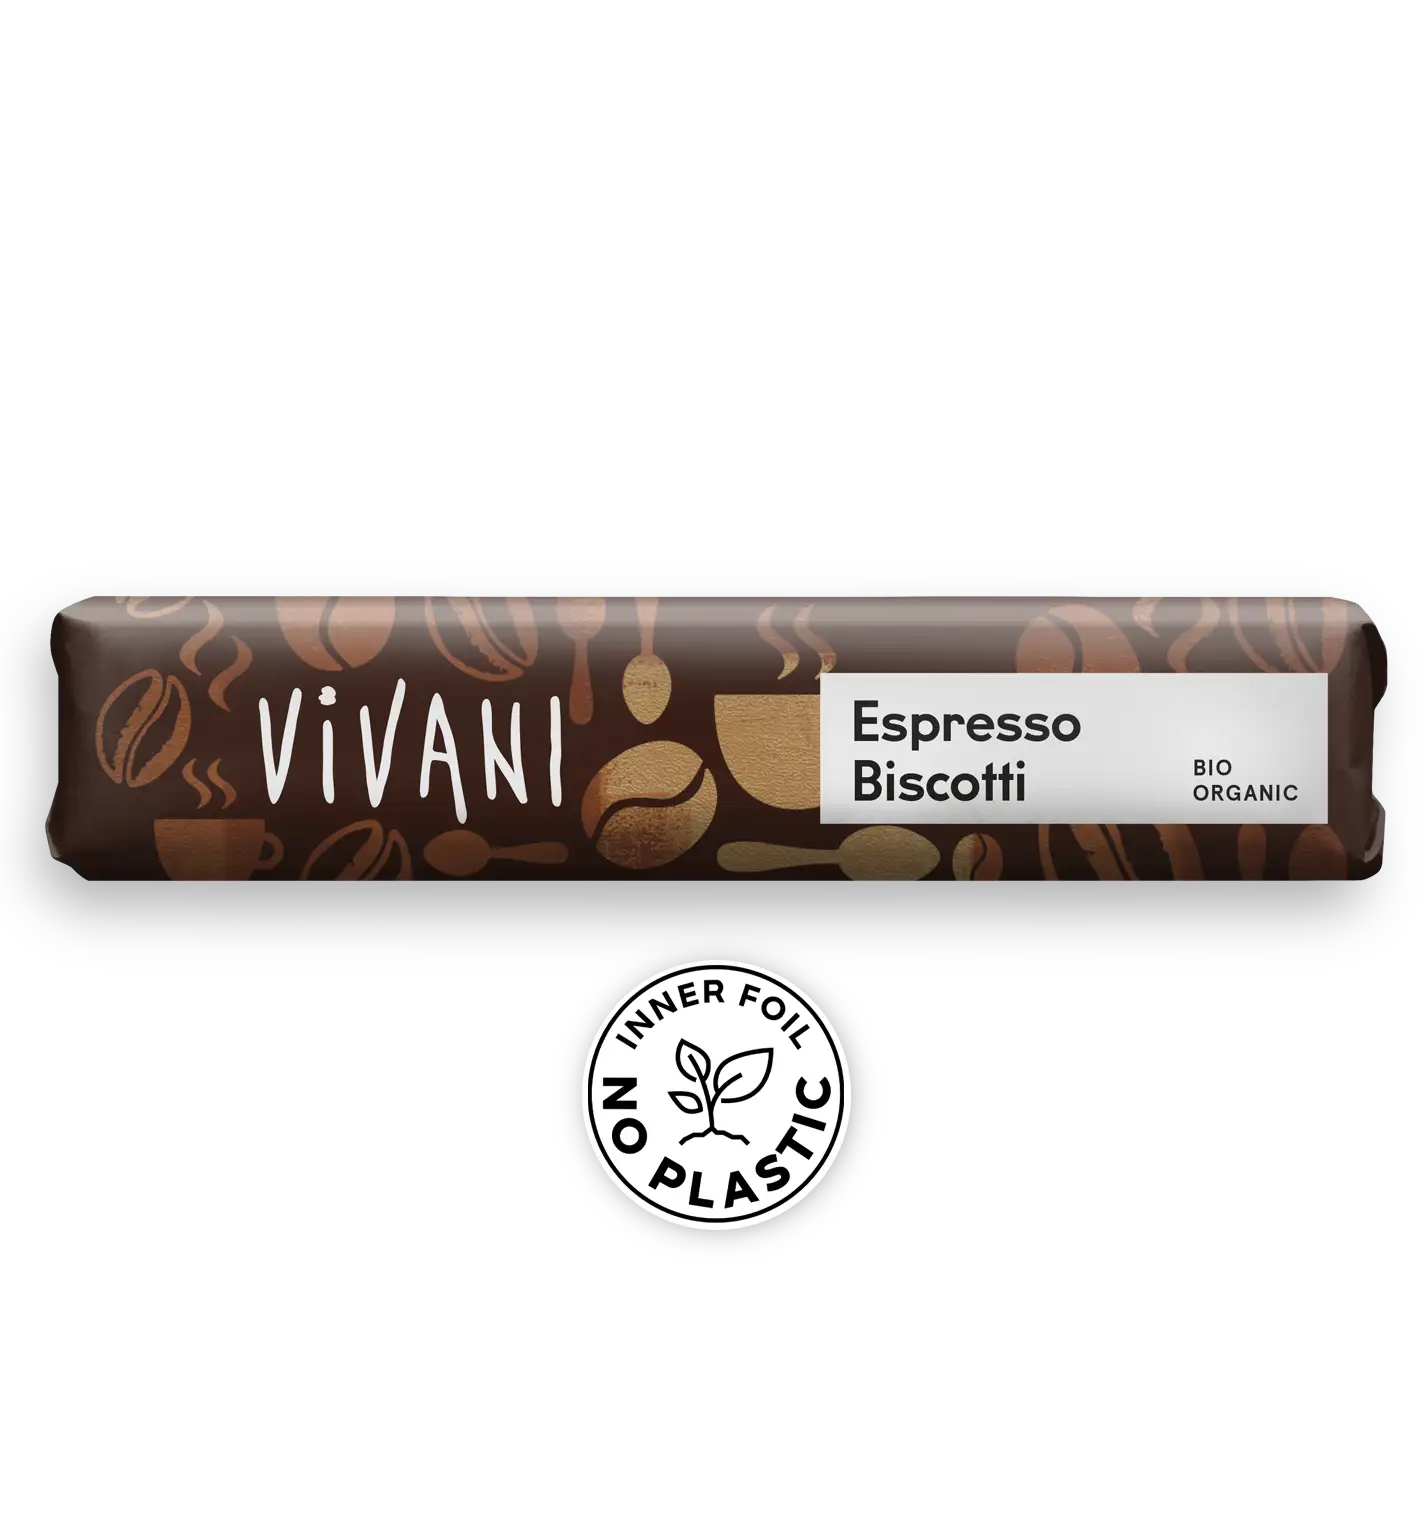 VIVANI's organic chocolate bar Espresso Biscotti with espresso cream and crispy wafer bits